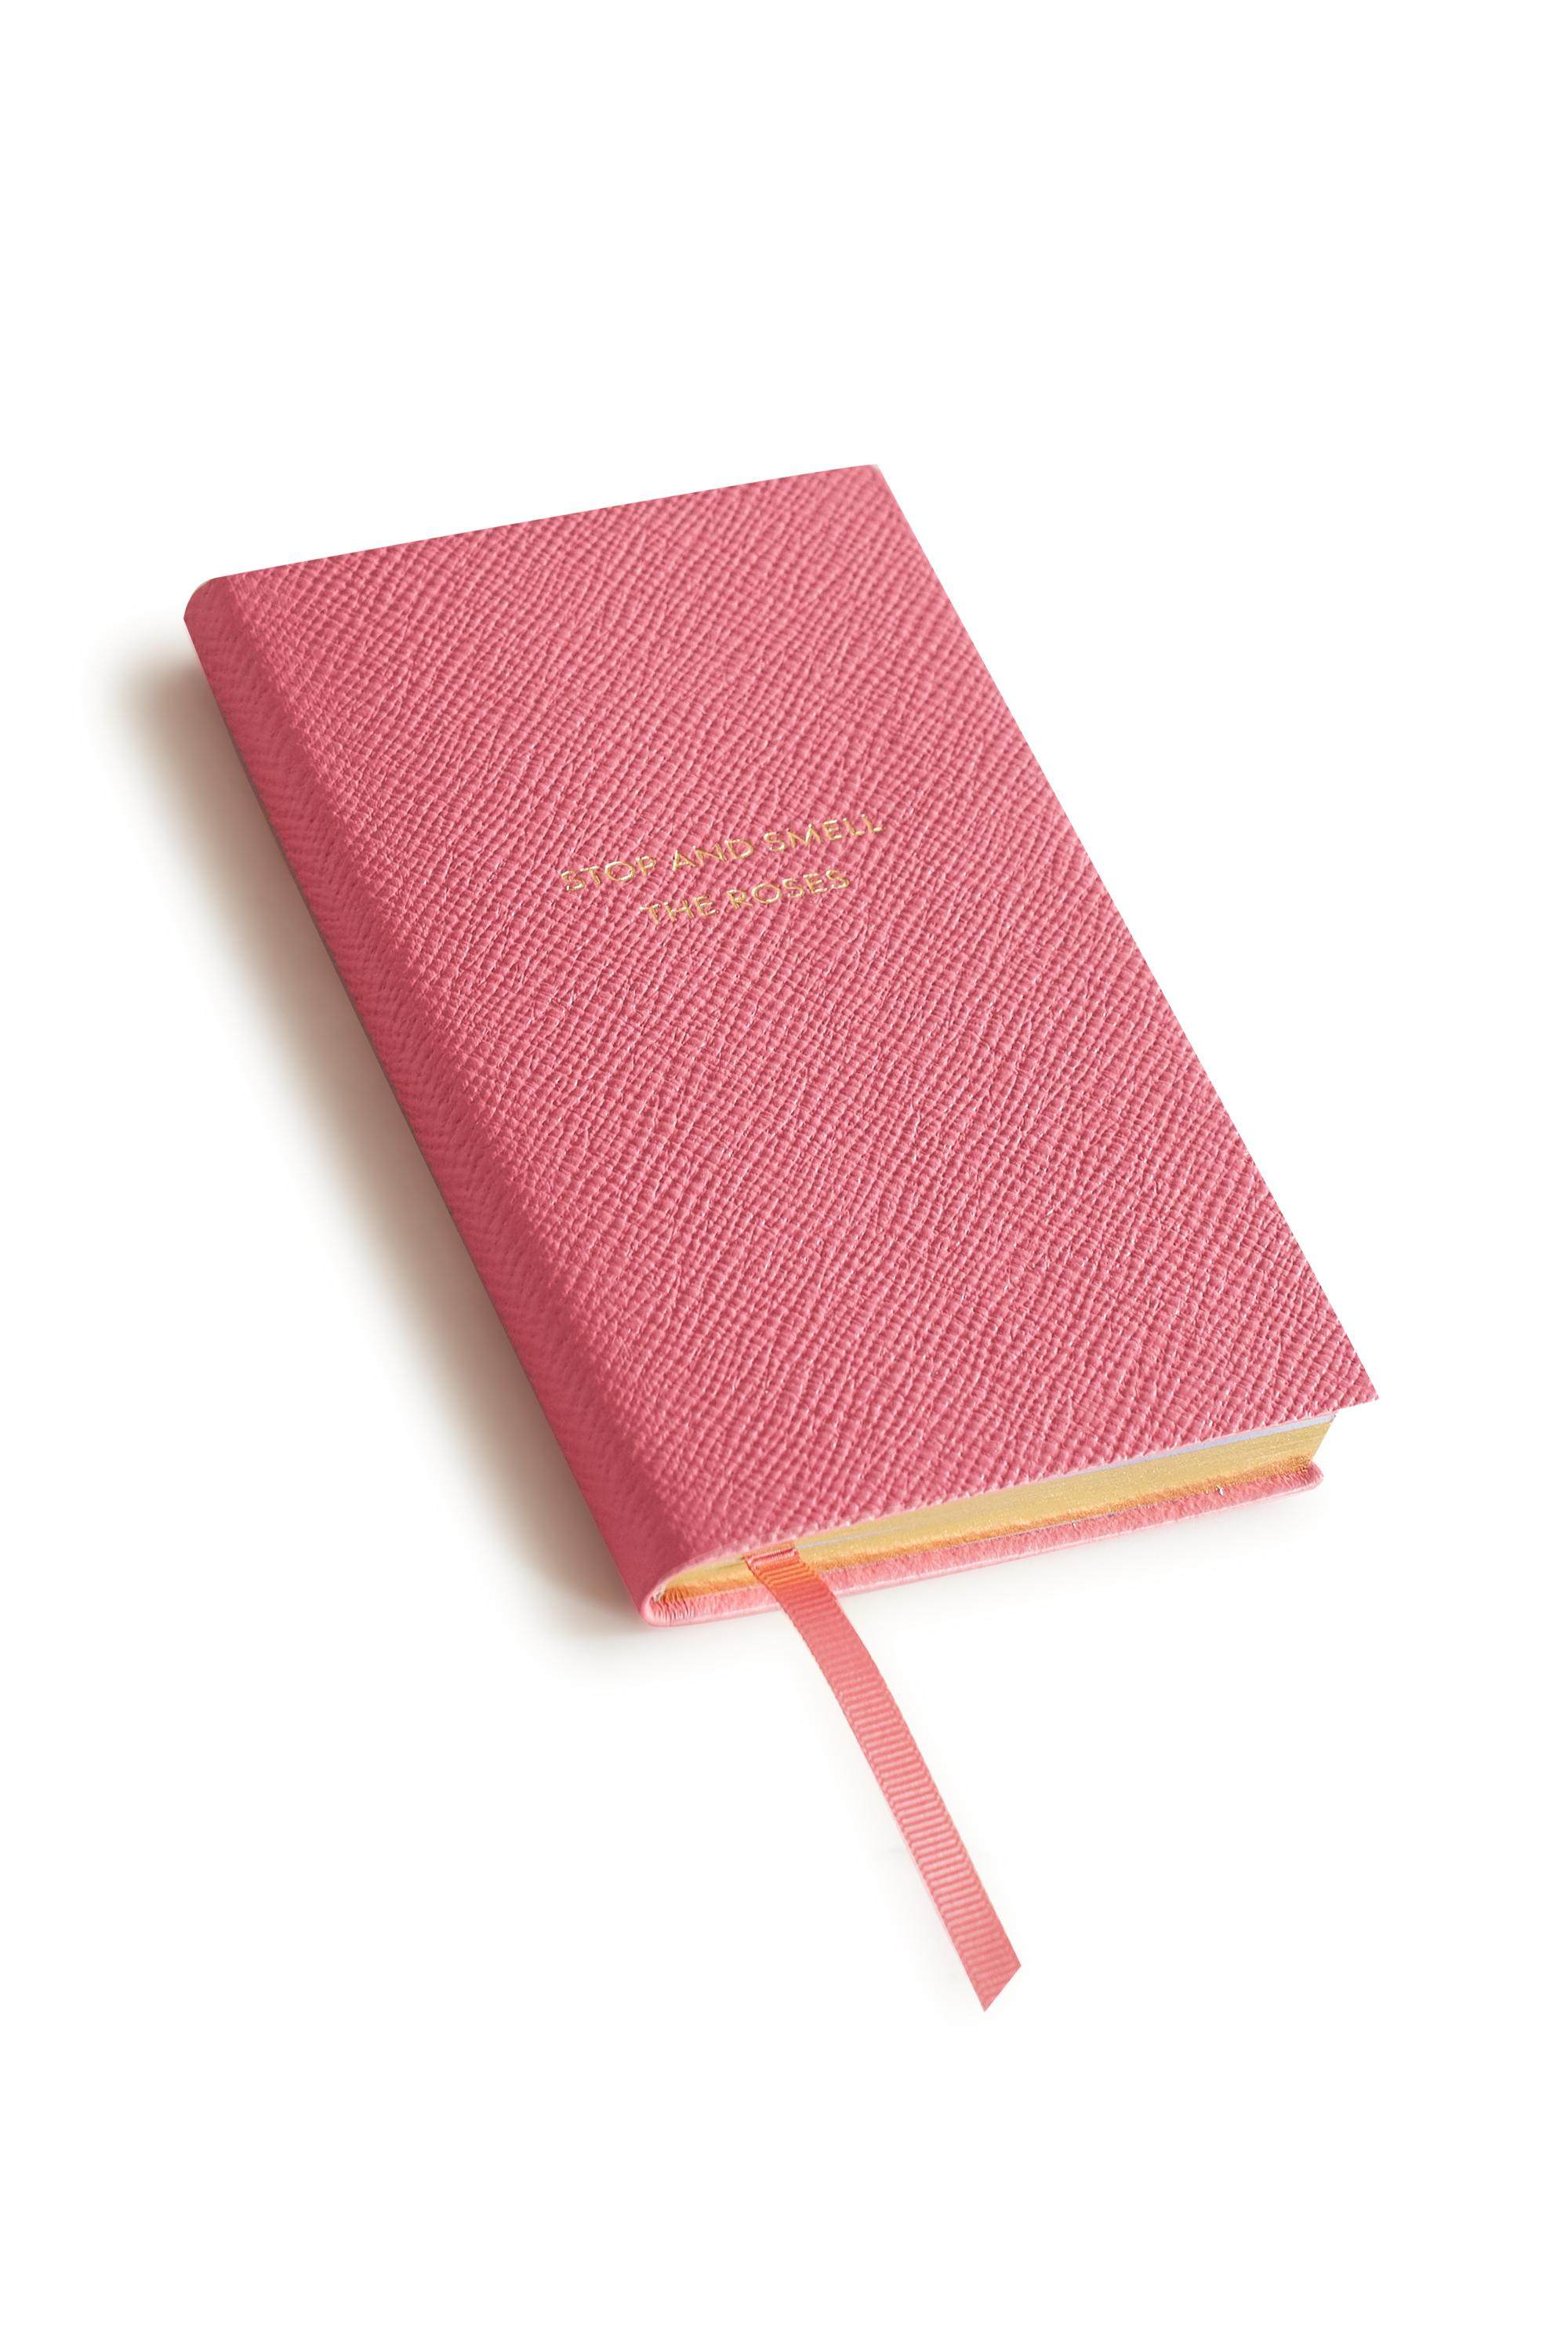 My very expensive love affair: Smythson : r/notebooks